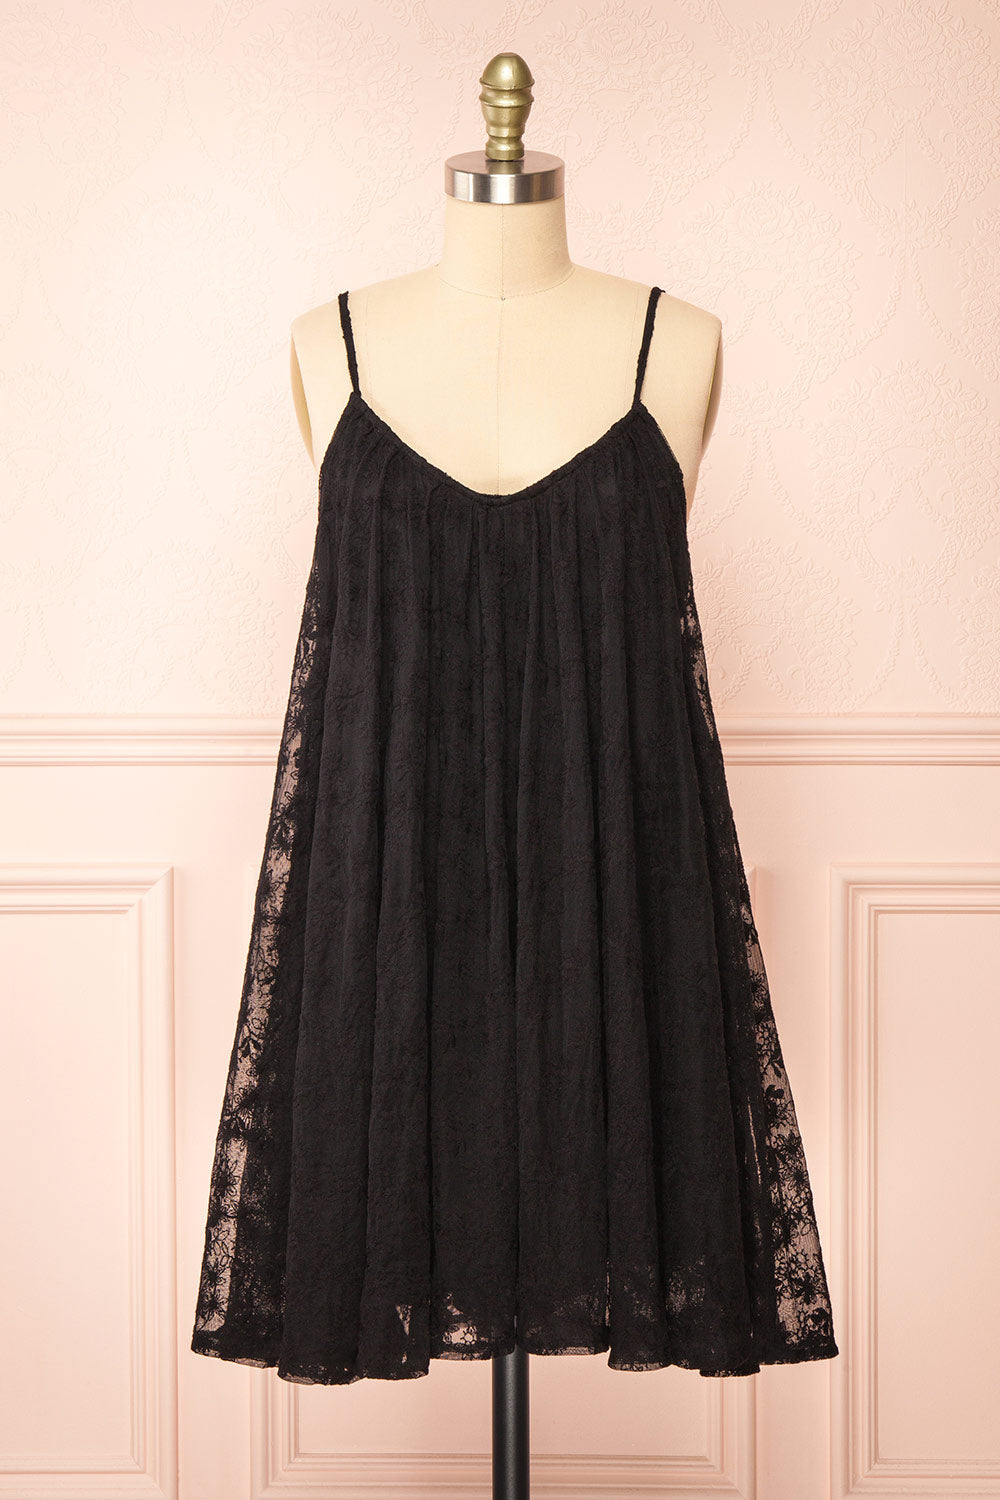 Liyan Black Short Floral Dress | Boutique 1861 front view